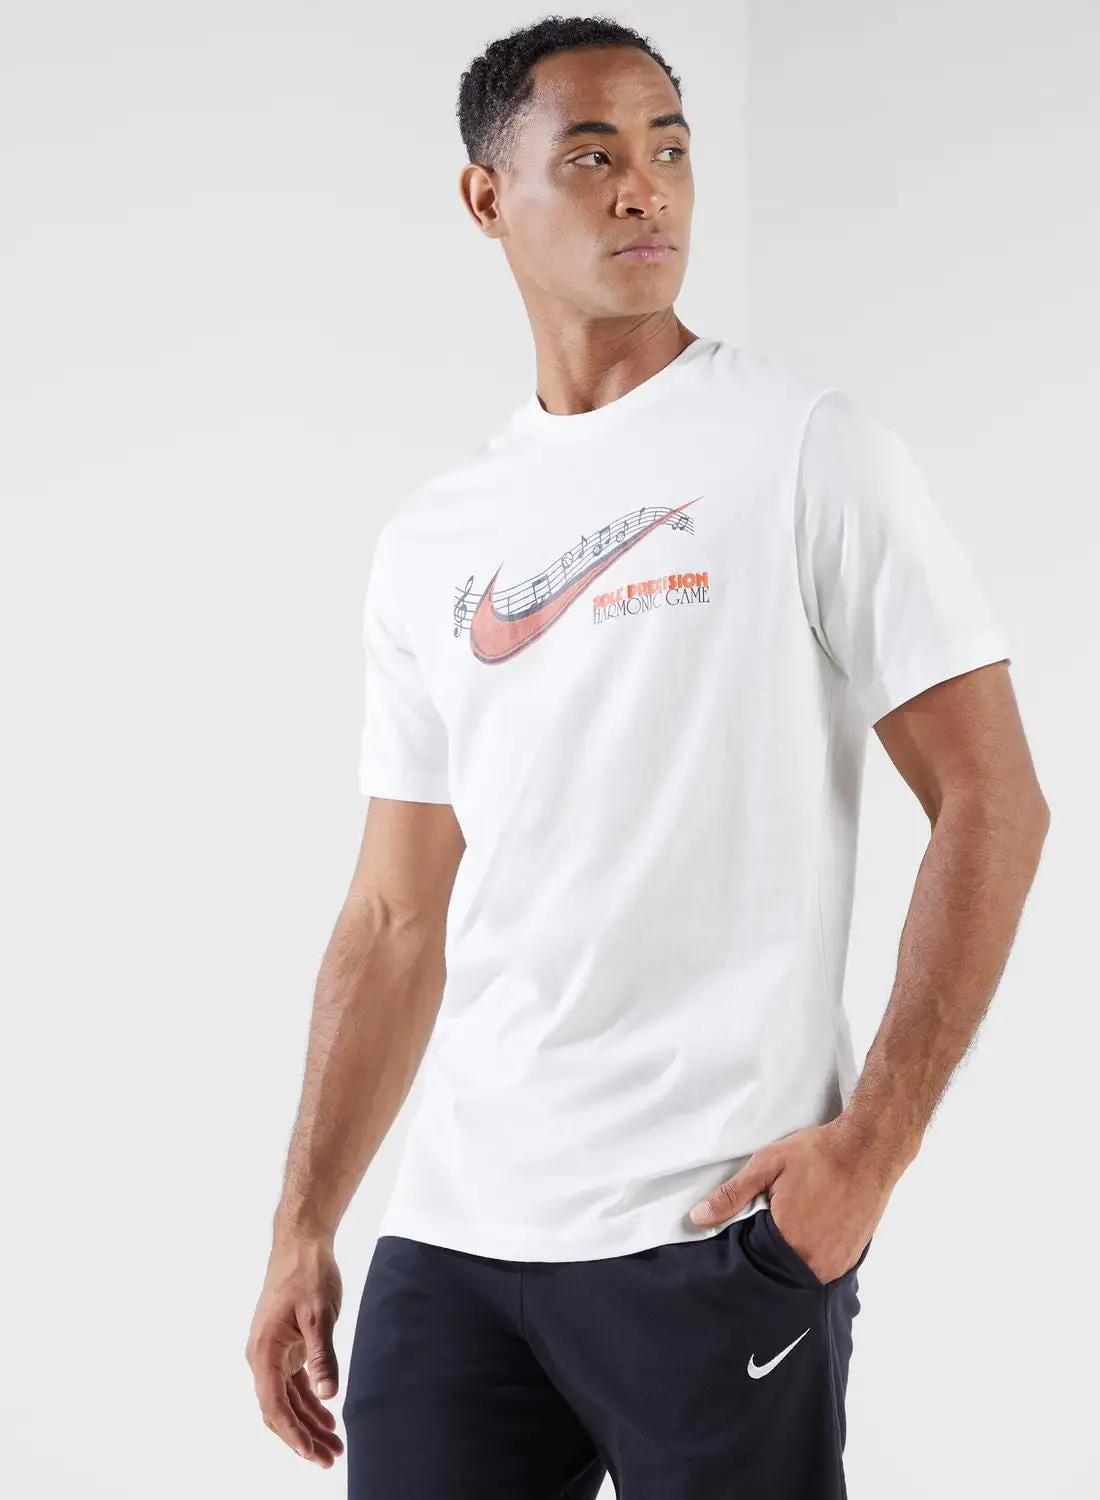 Nike Logo Oc Sp24 T-Shirt